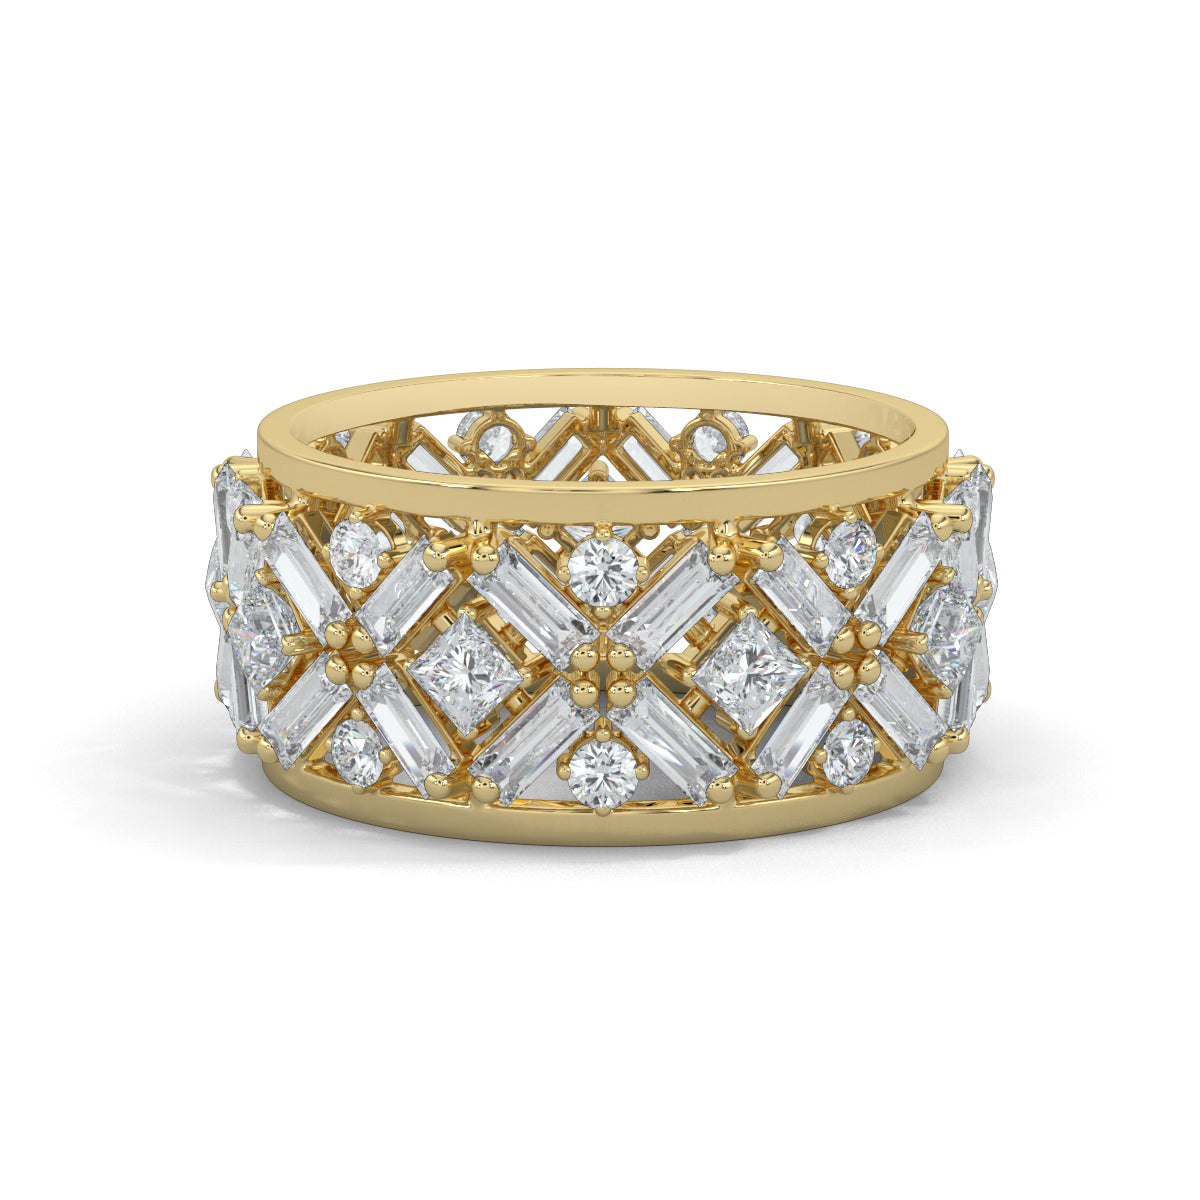 Yellow Gold, Diamond Ring, Natural diamond ring, Lab-grown diamond ring, Eternity band diamond ring, Baguette and round-cut diamond ring, Everyday diamond ring